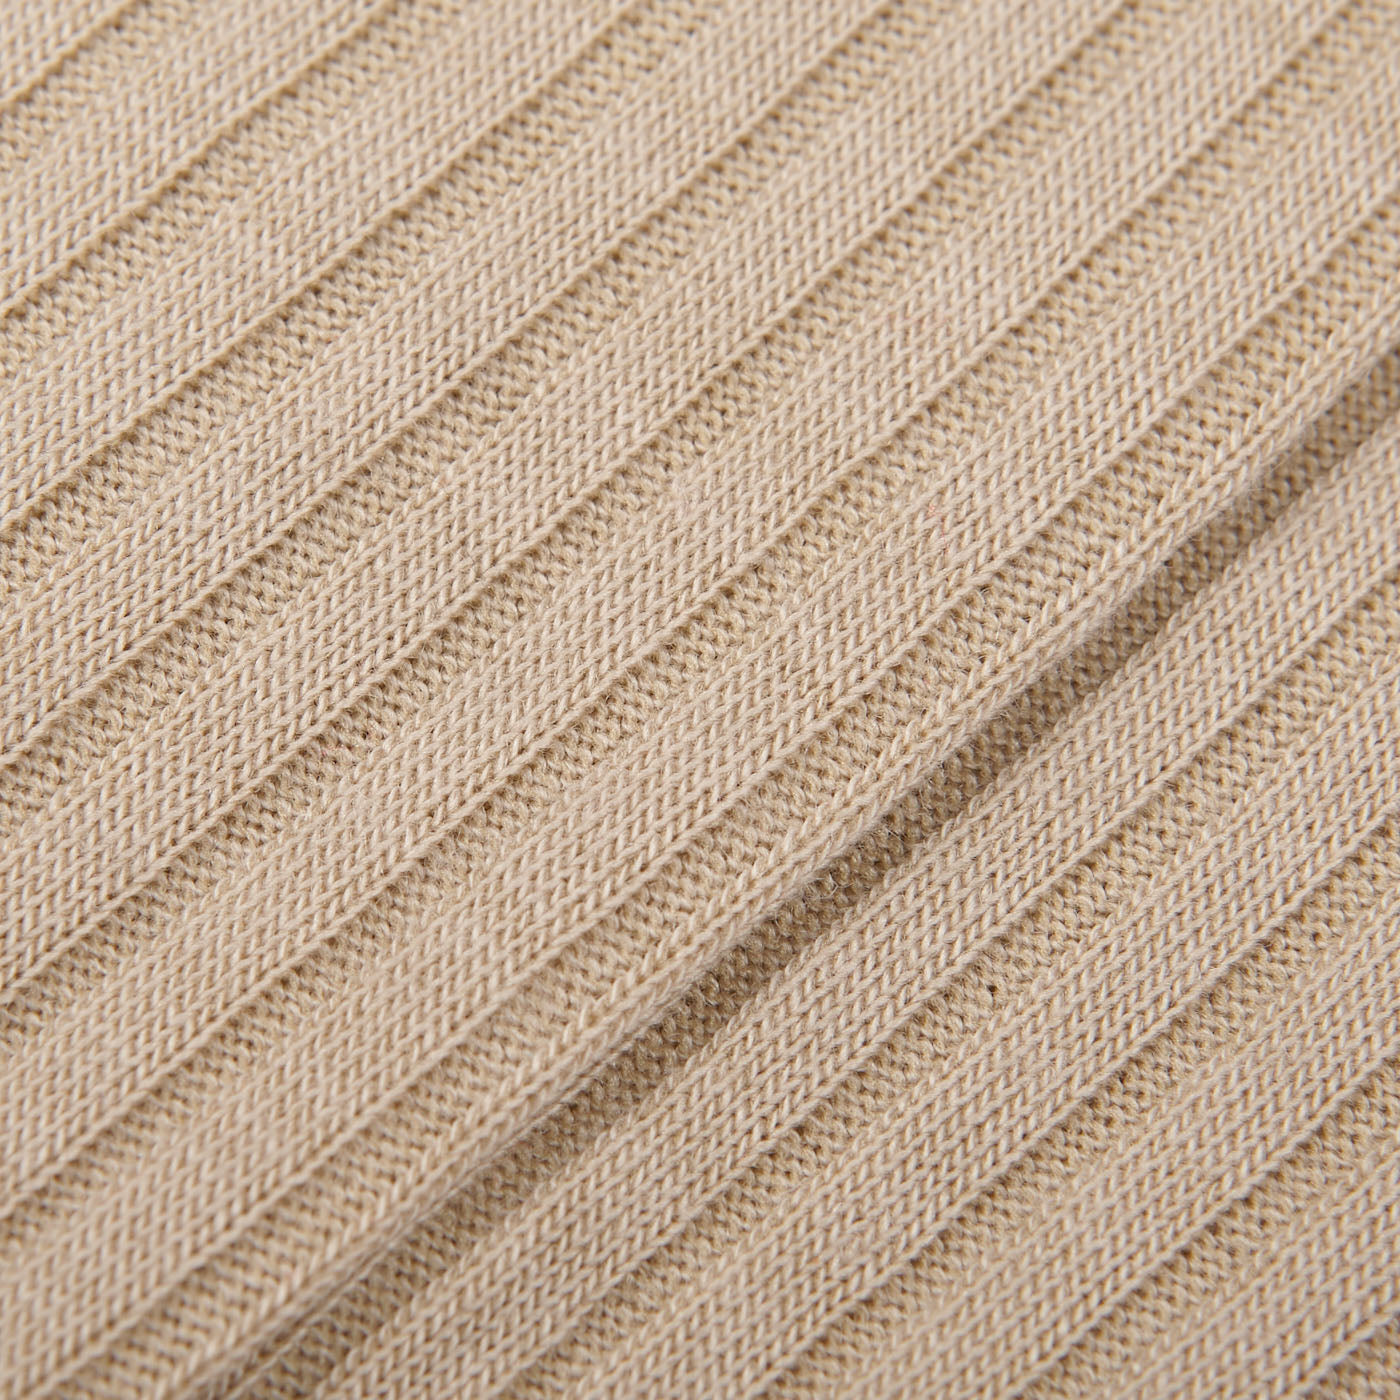 Pantherella Light Khaki Merino Wool Ribbed Ankle Socks Fabric